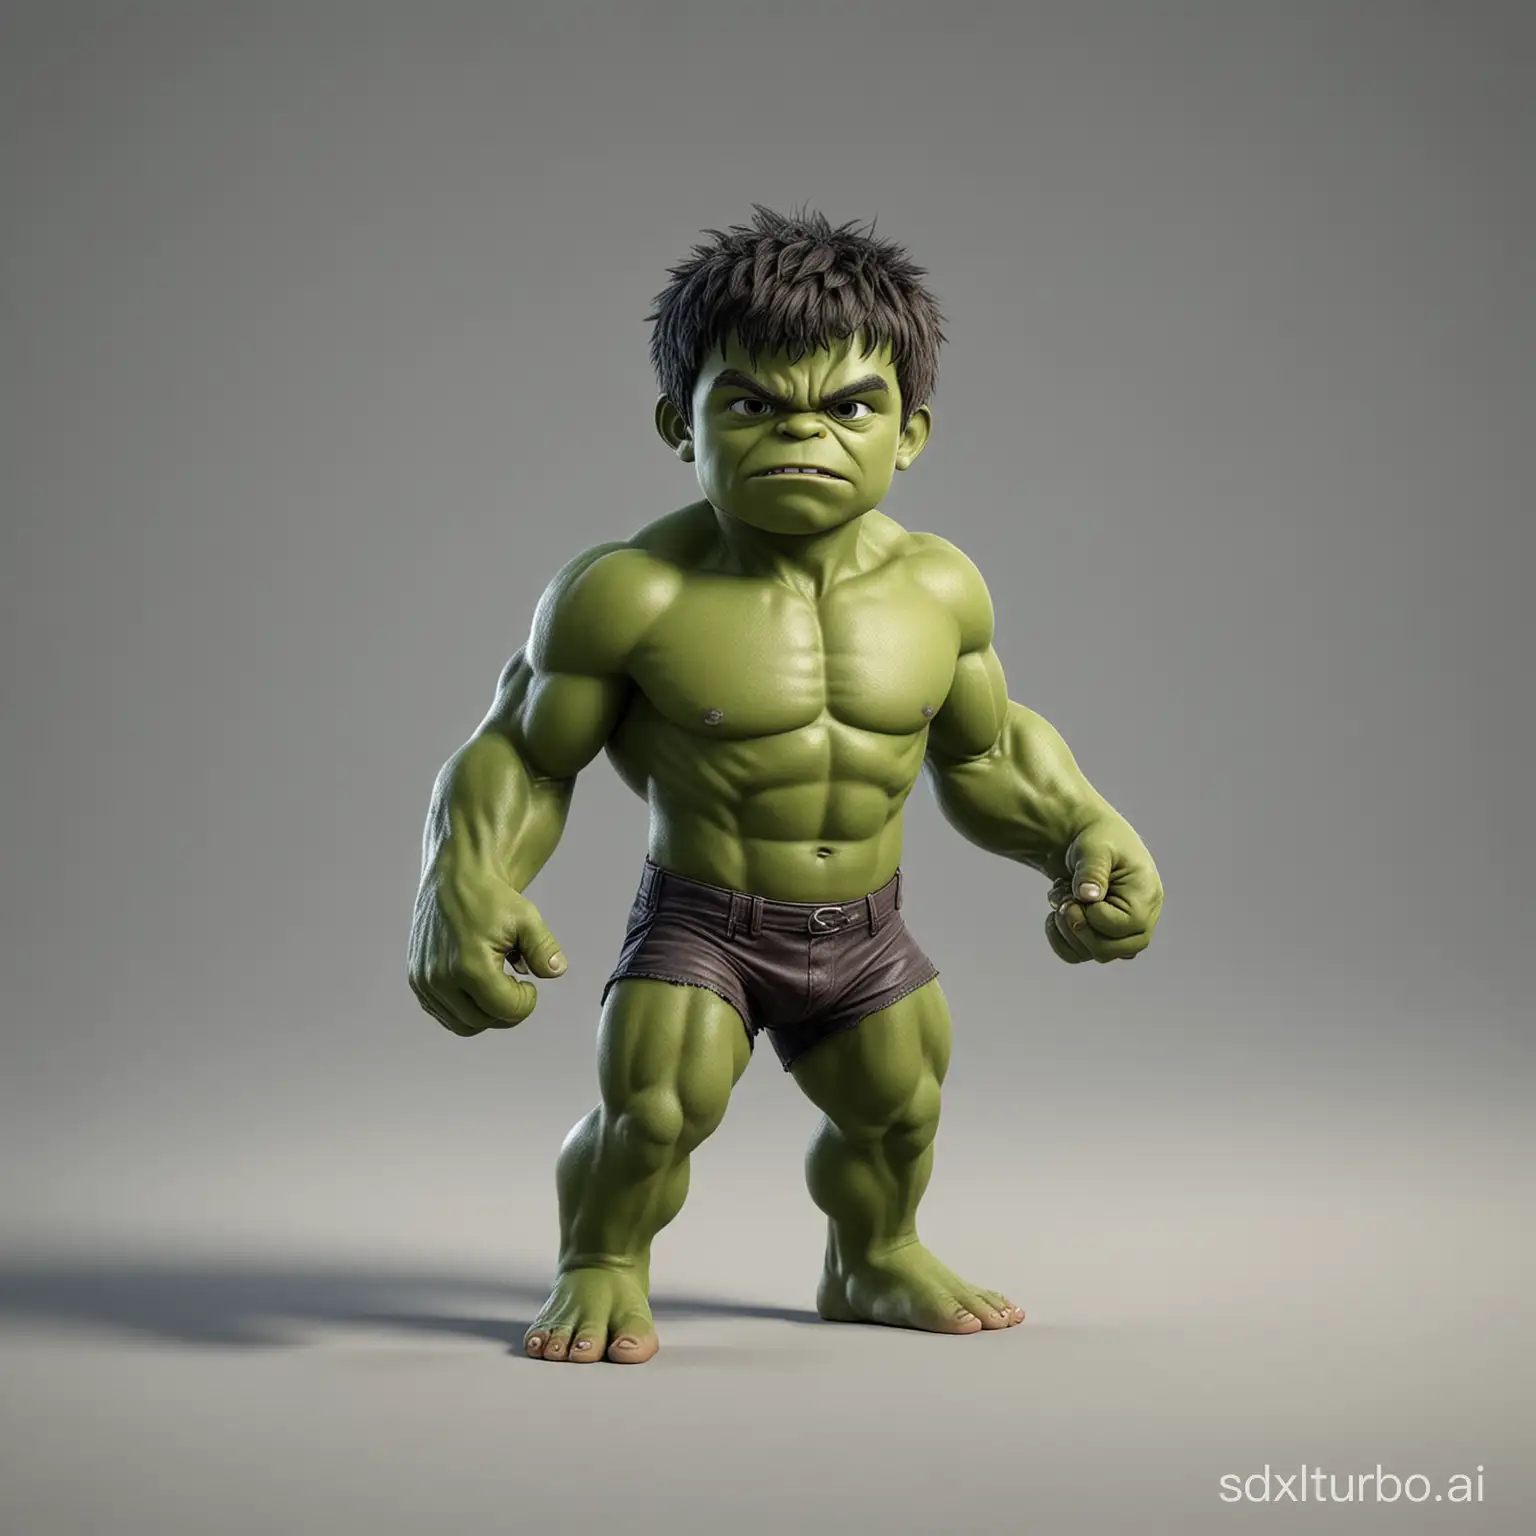 Playful-Little-Hulk-Game-Character-Standing-Tall